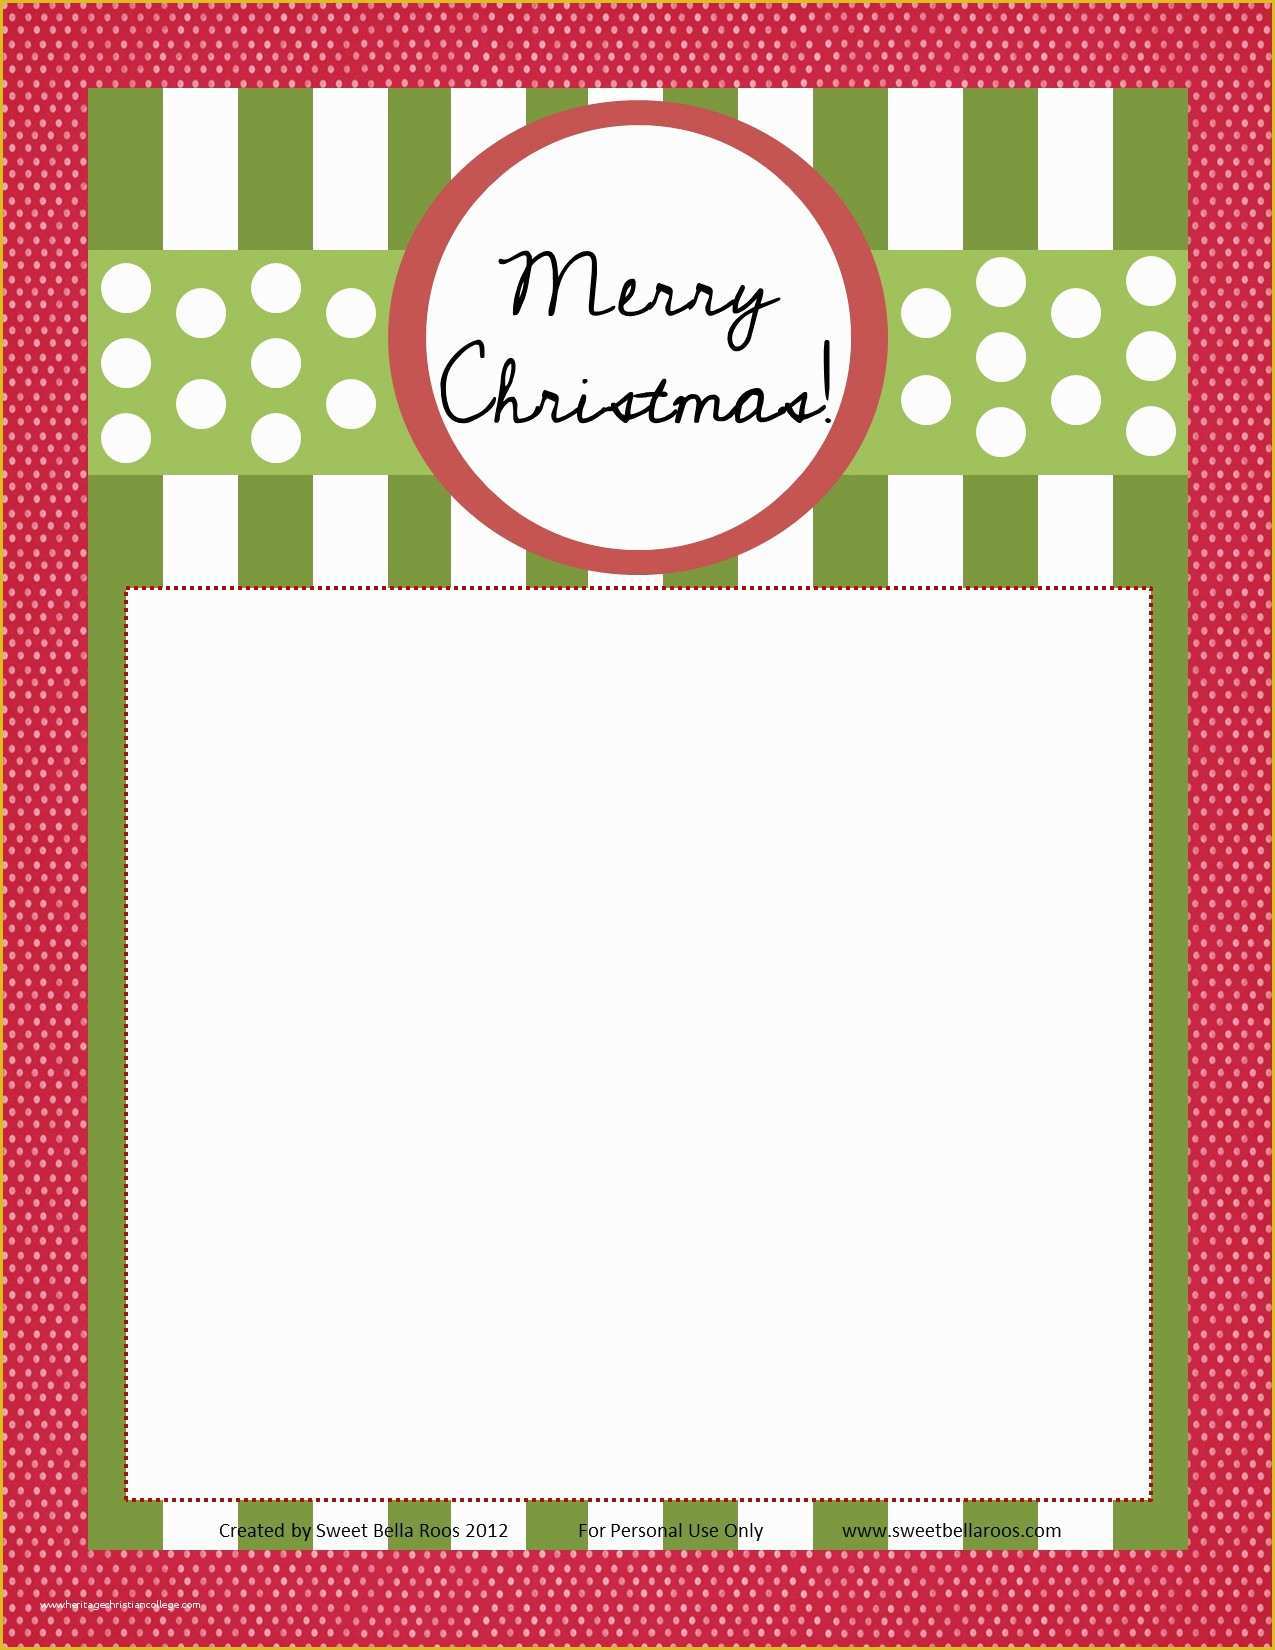 Dear Santa Letter Template Free Of Dear Santa Letter Template Free Printable